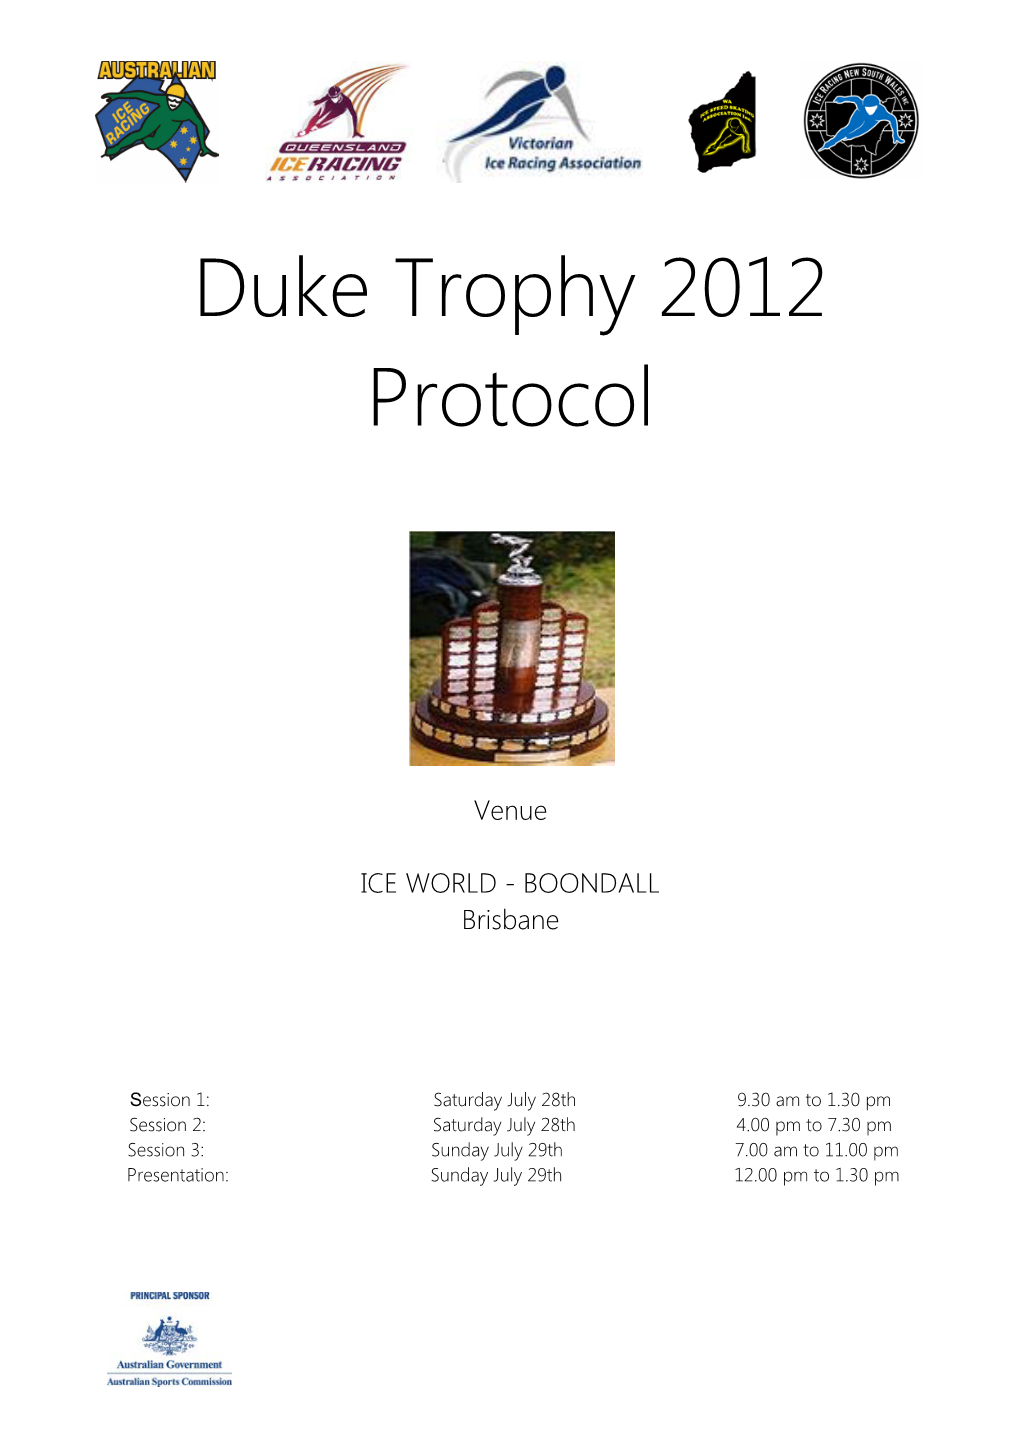 Duke Trophy 2012 Protocol